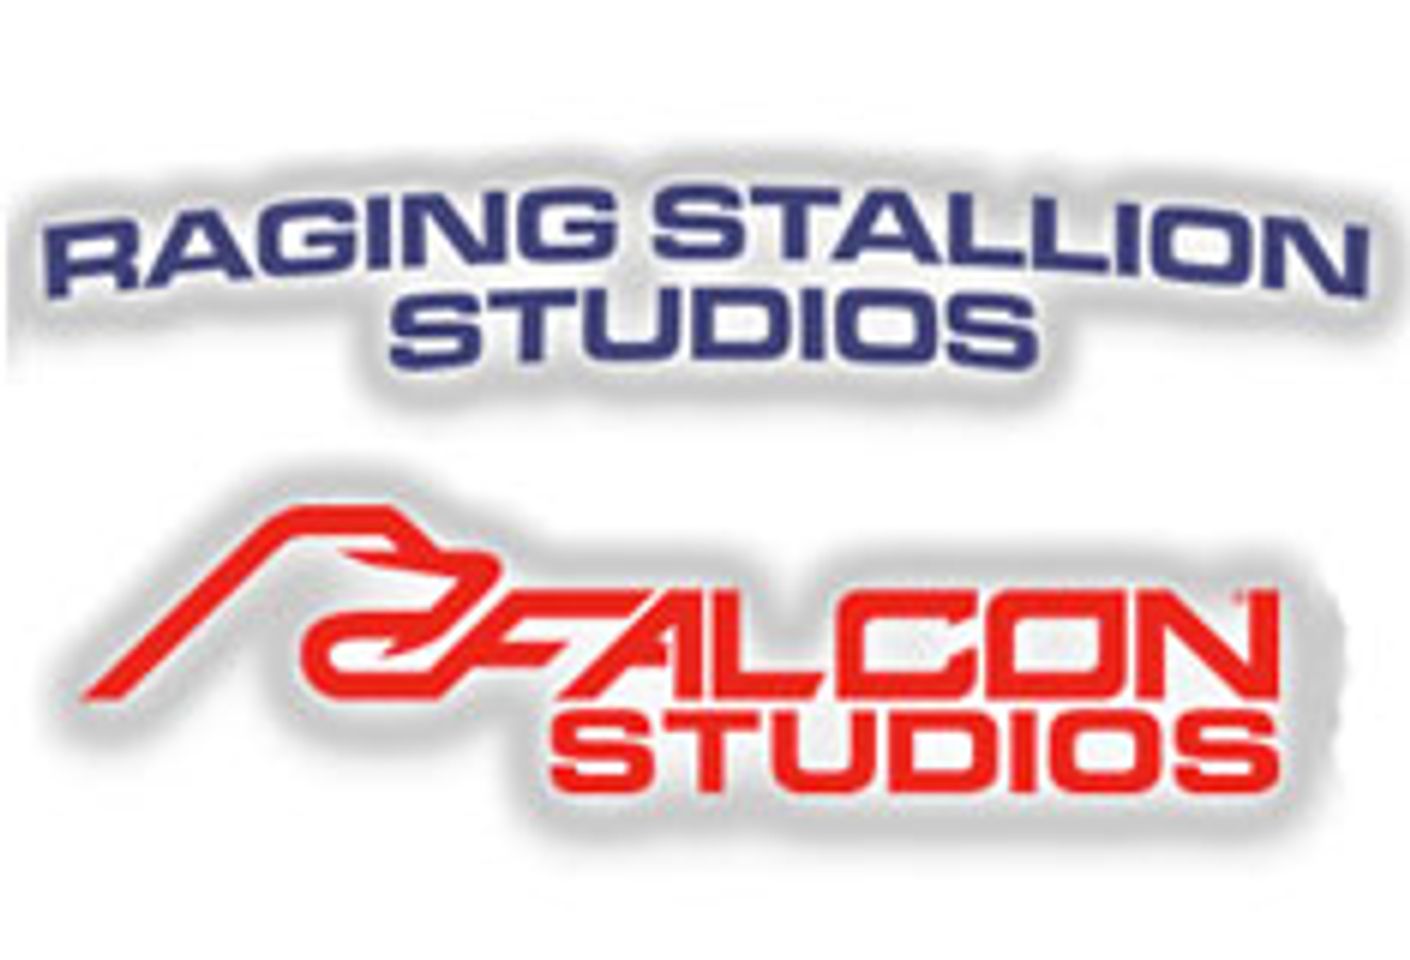 Falcon, Raging Stallion Studios Land 45 Grabby Award Nominations